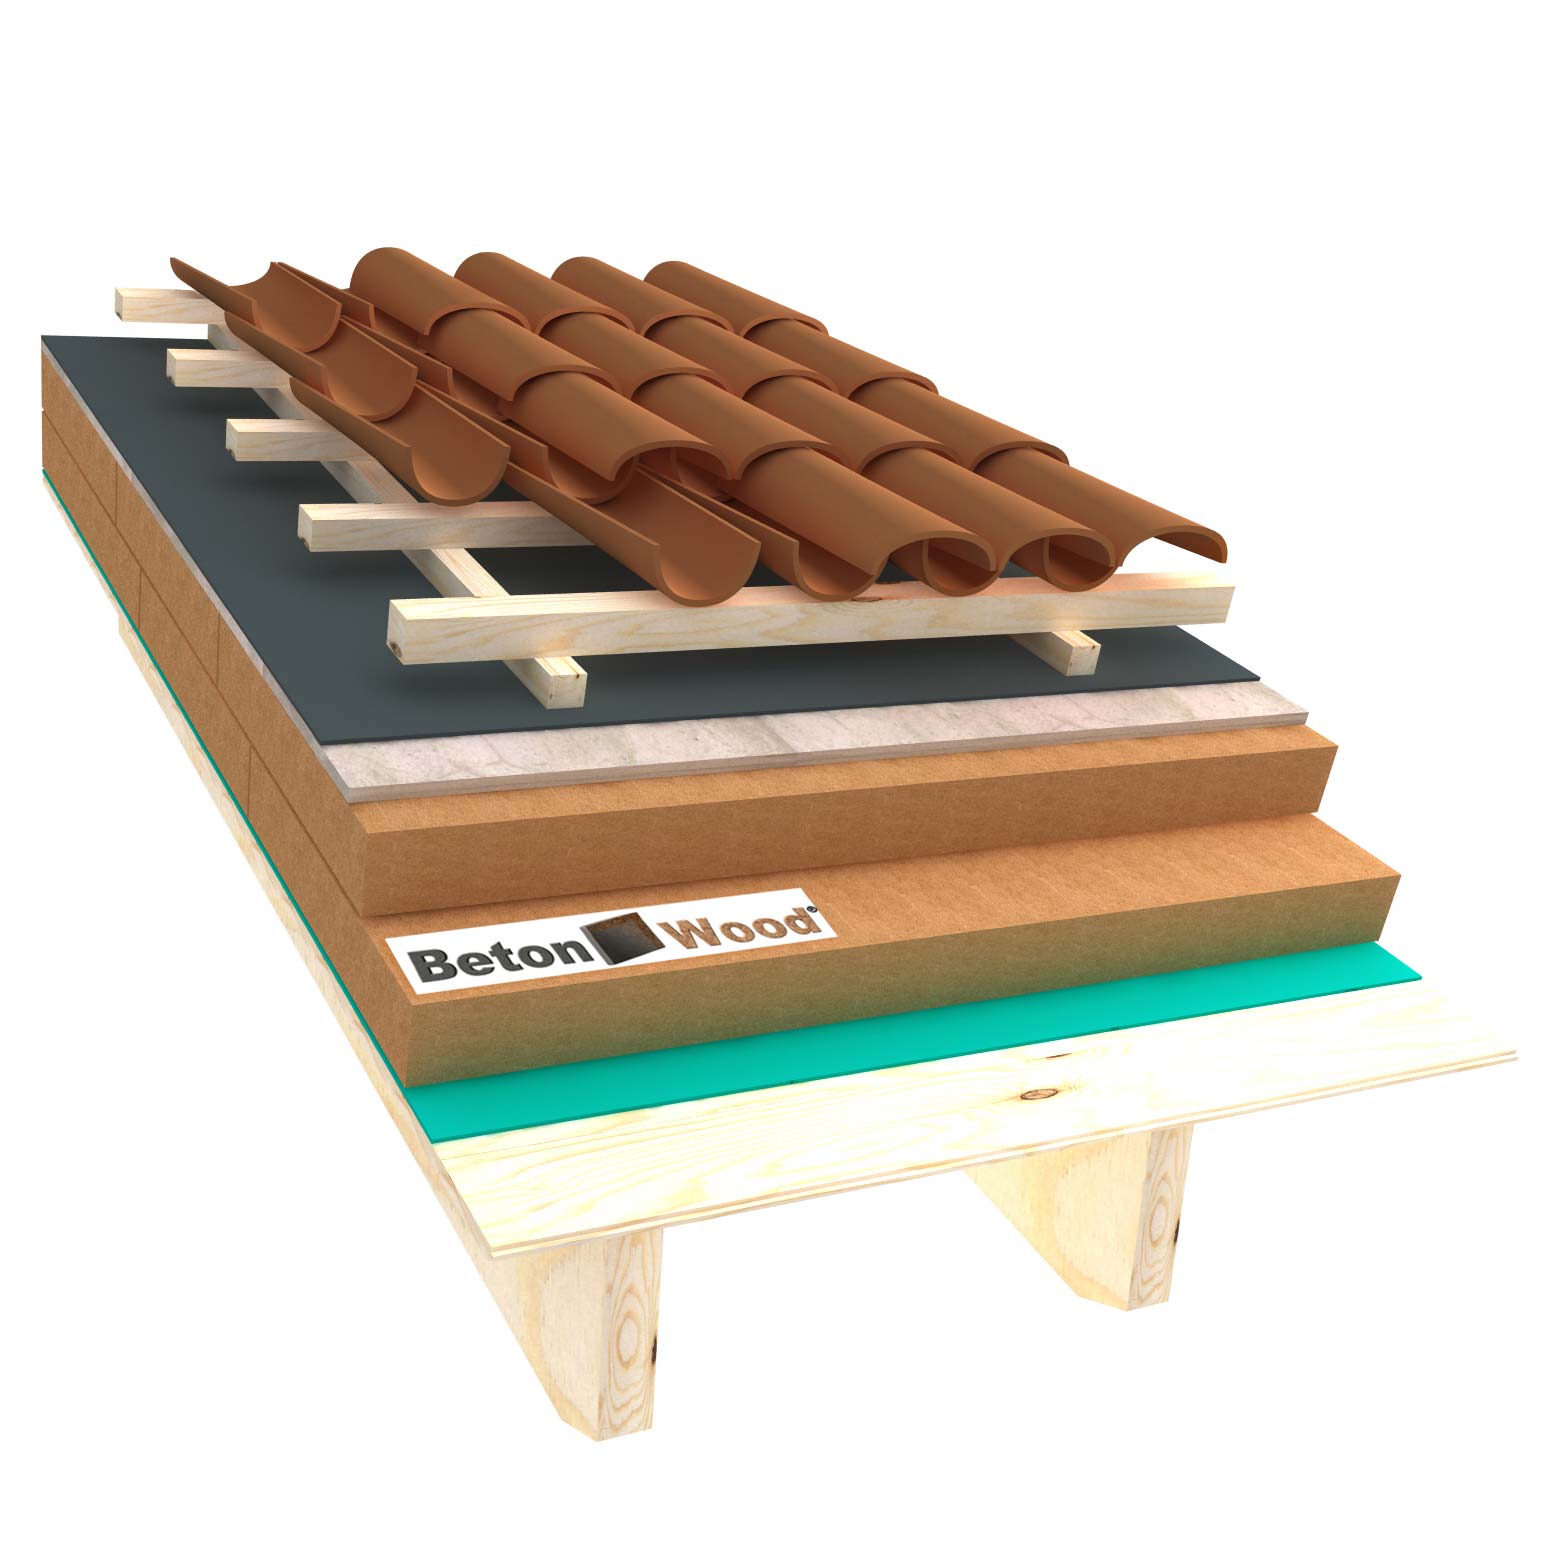 Fiber wood Therm and BetonWood roof